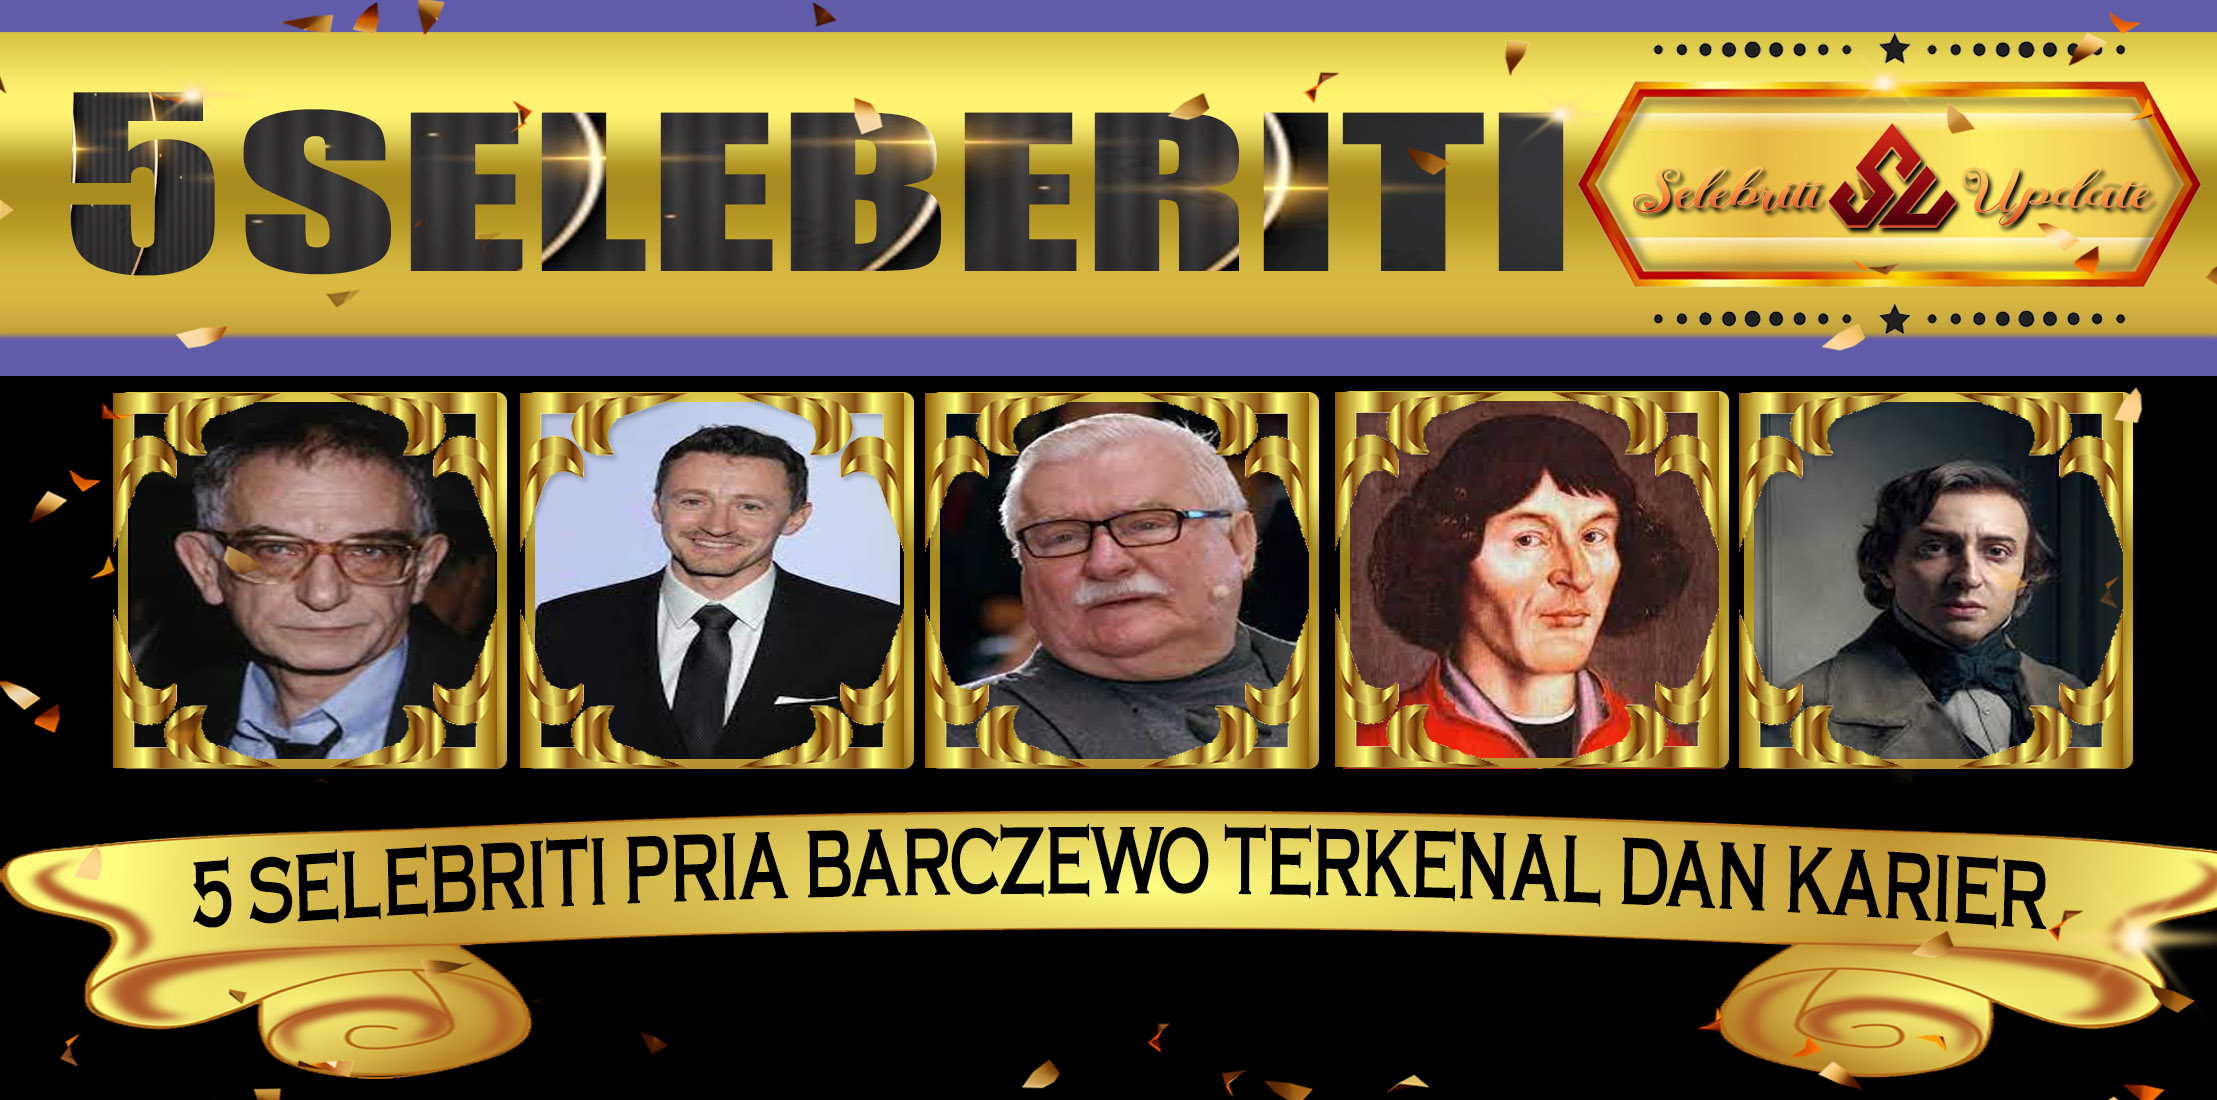 5 Selebriti Pria Barczewo